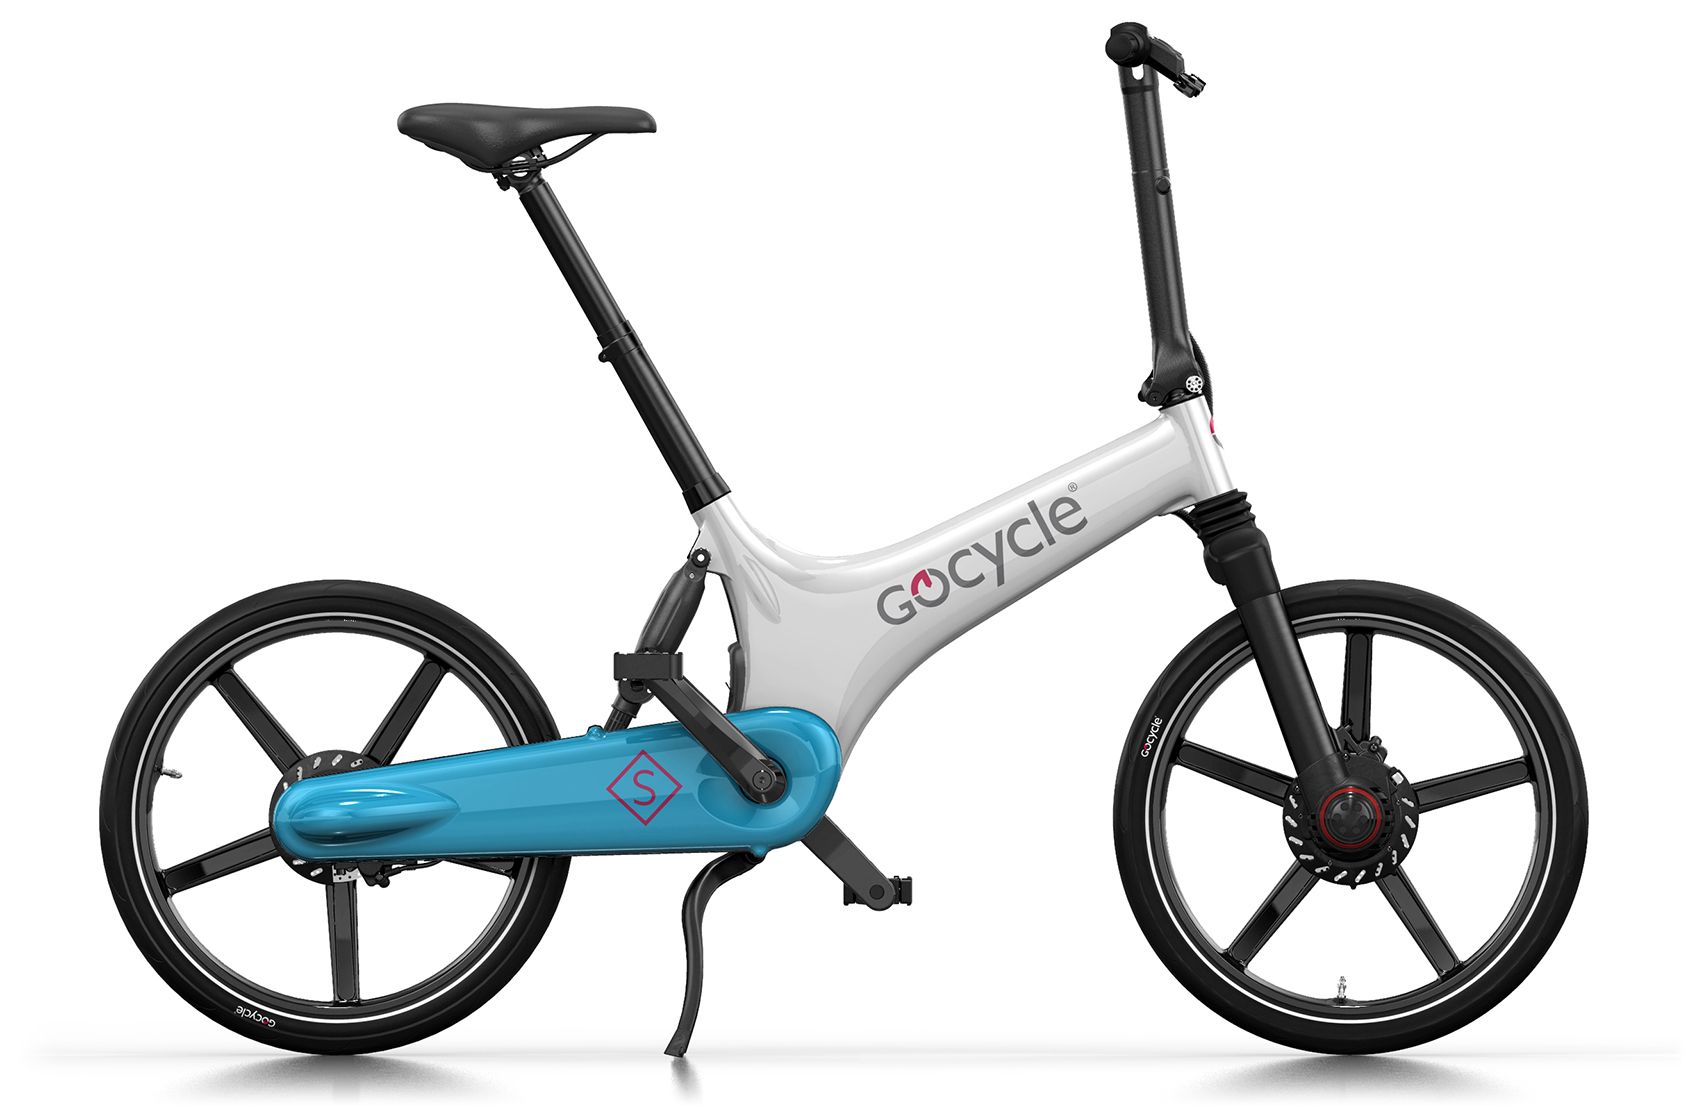 Gocycle GS